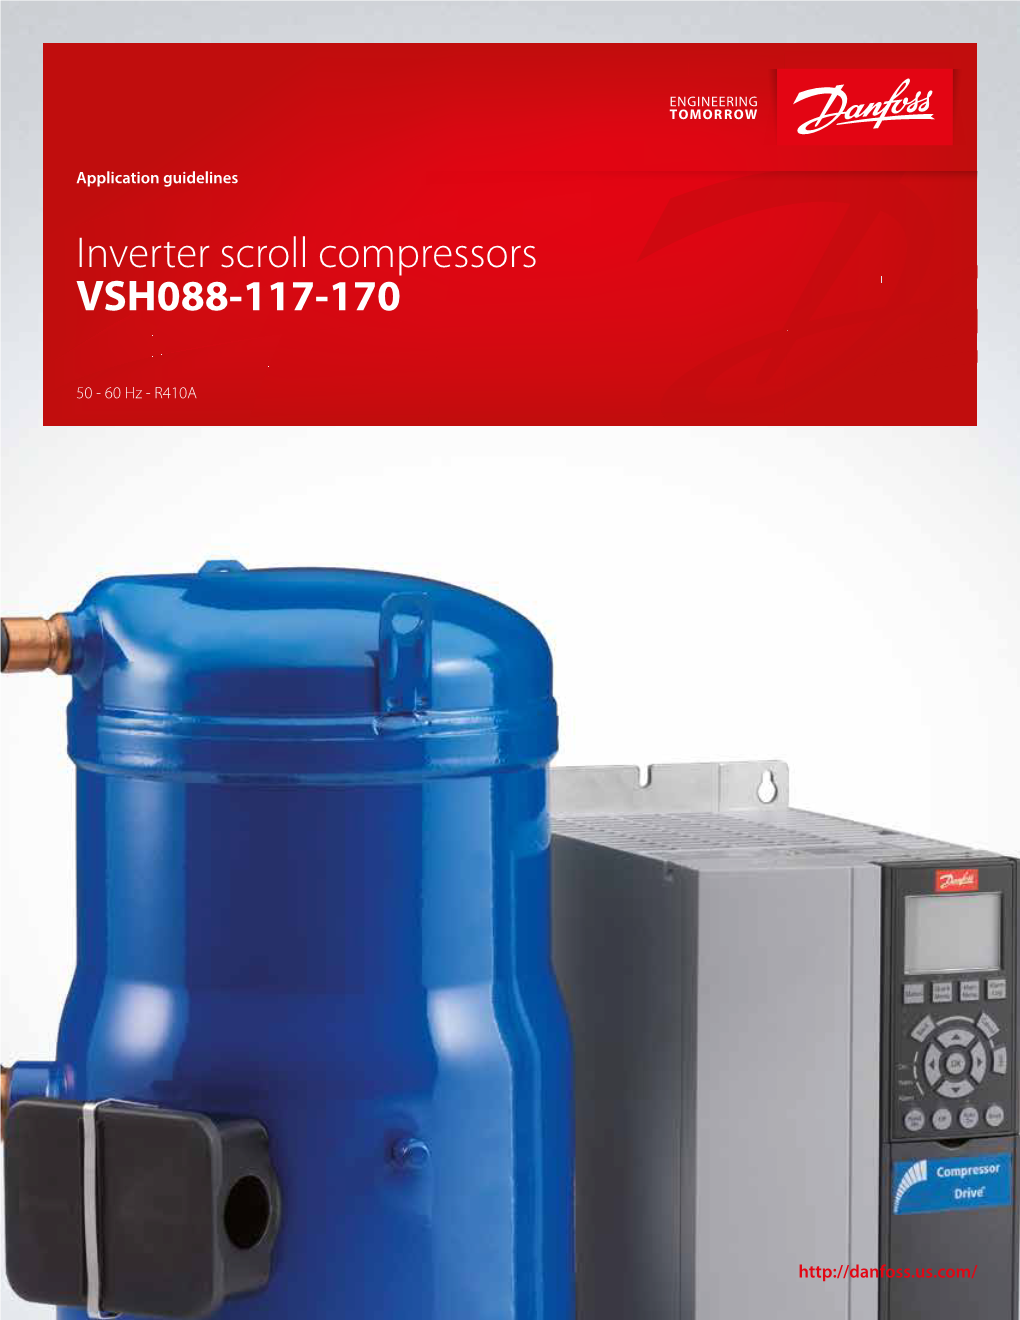 Inverter Scroll Compressors VSH088-117-170